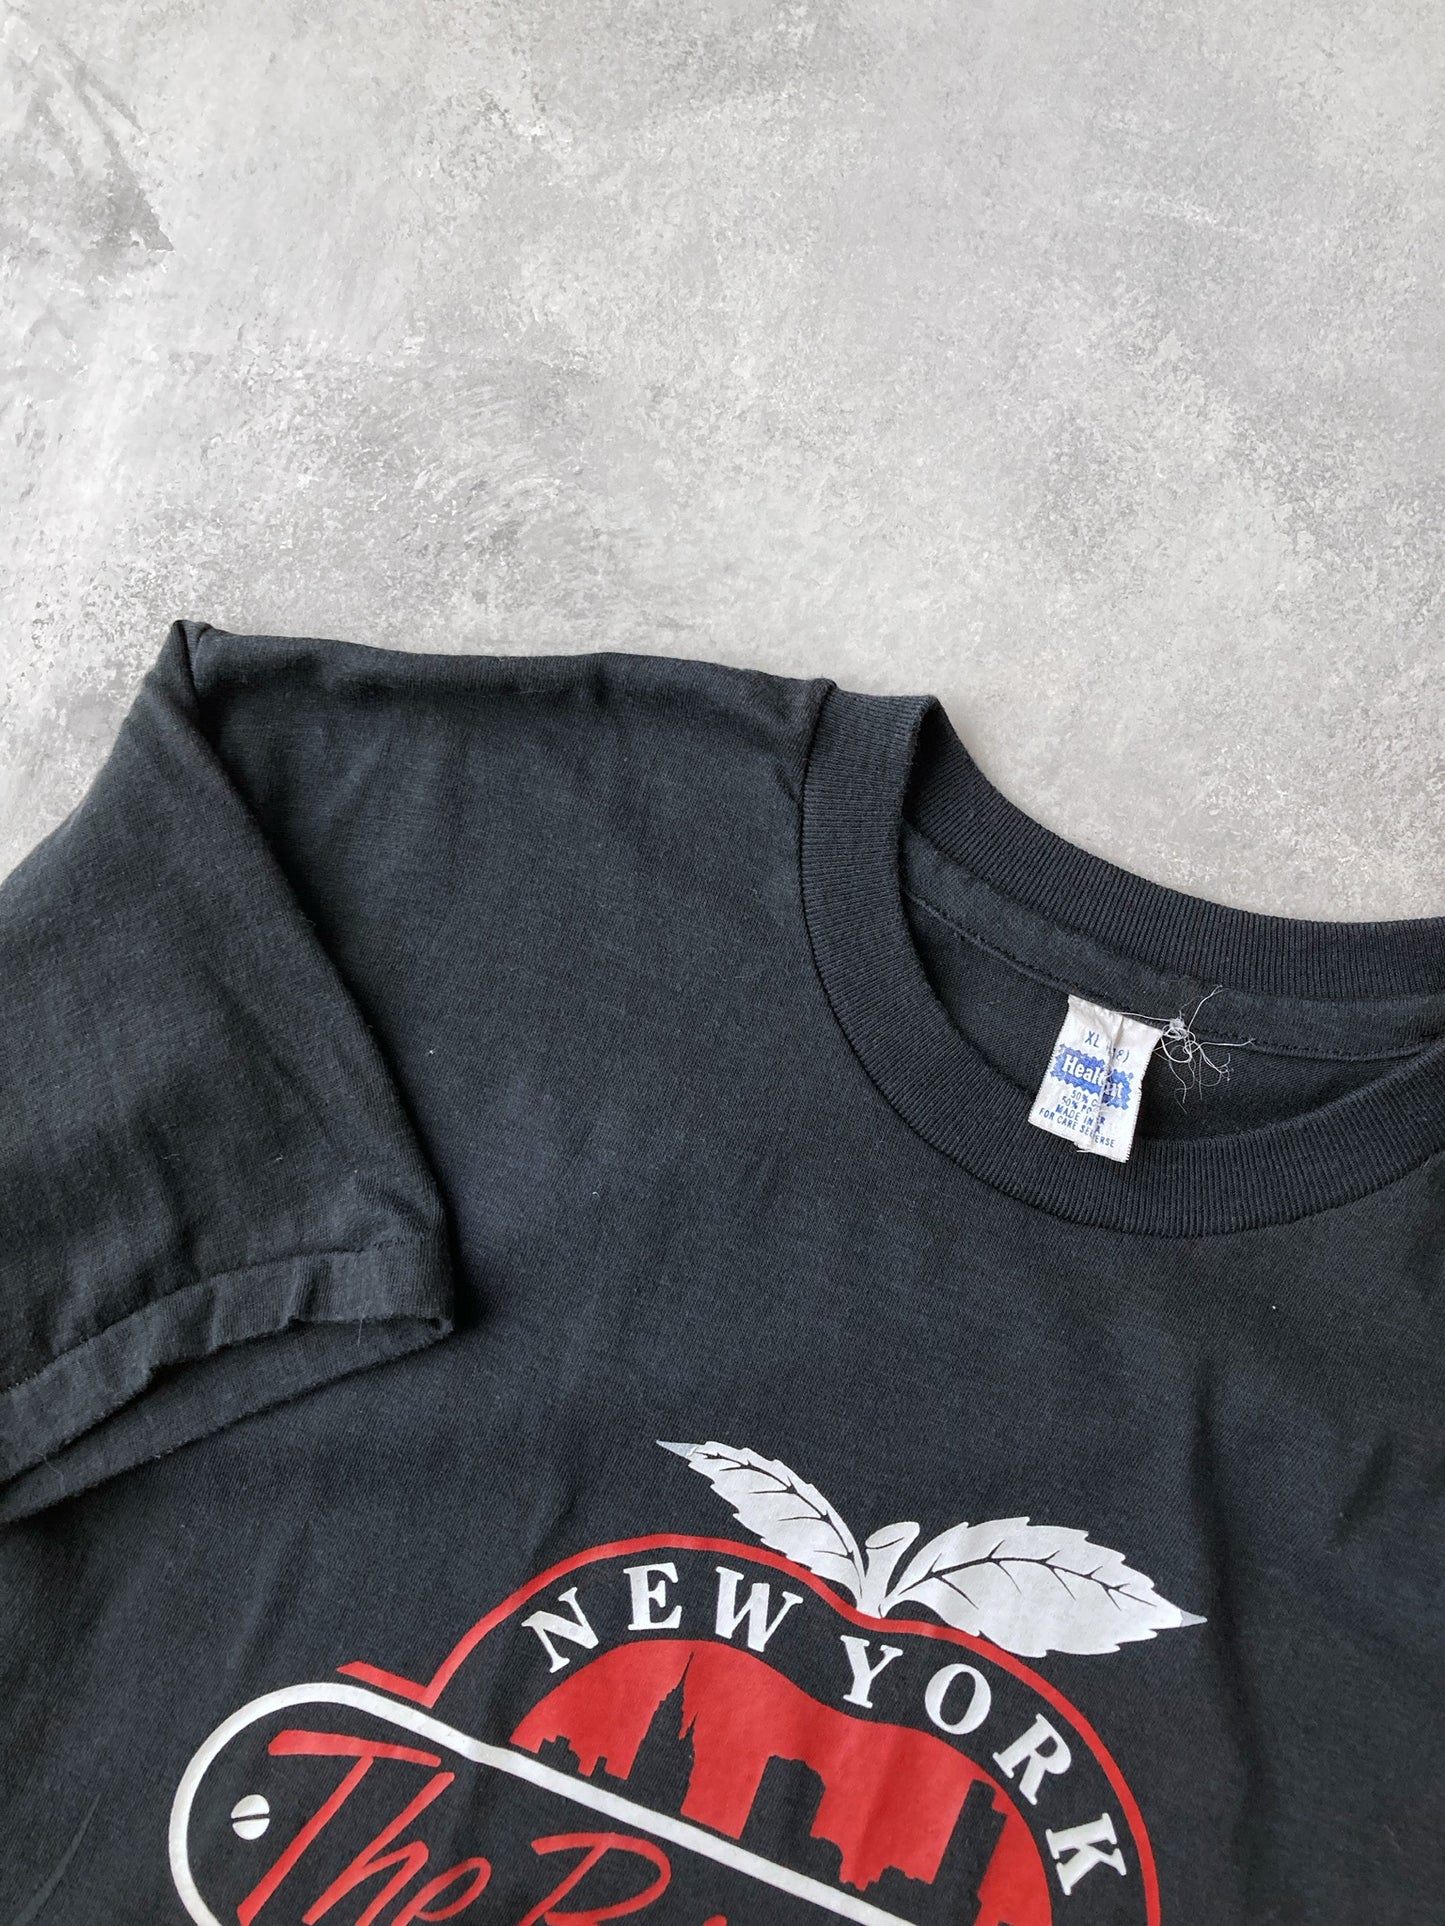 New York City T-shirt 80's - Medium